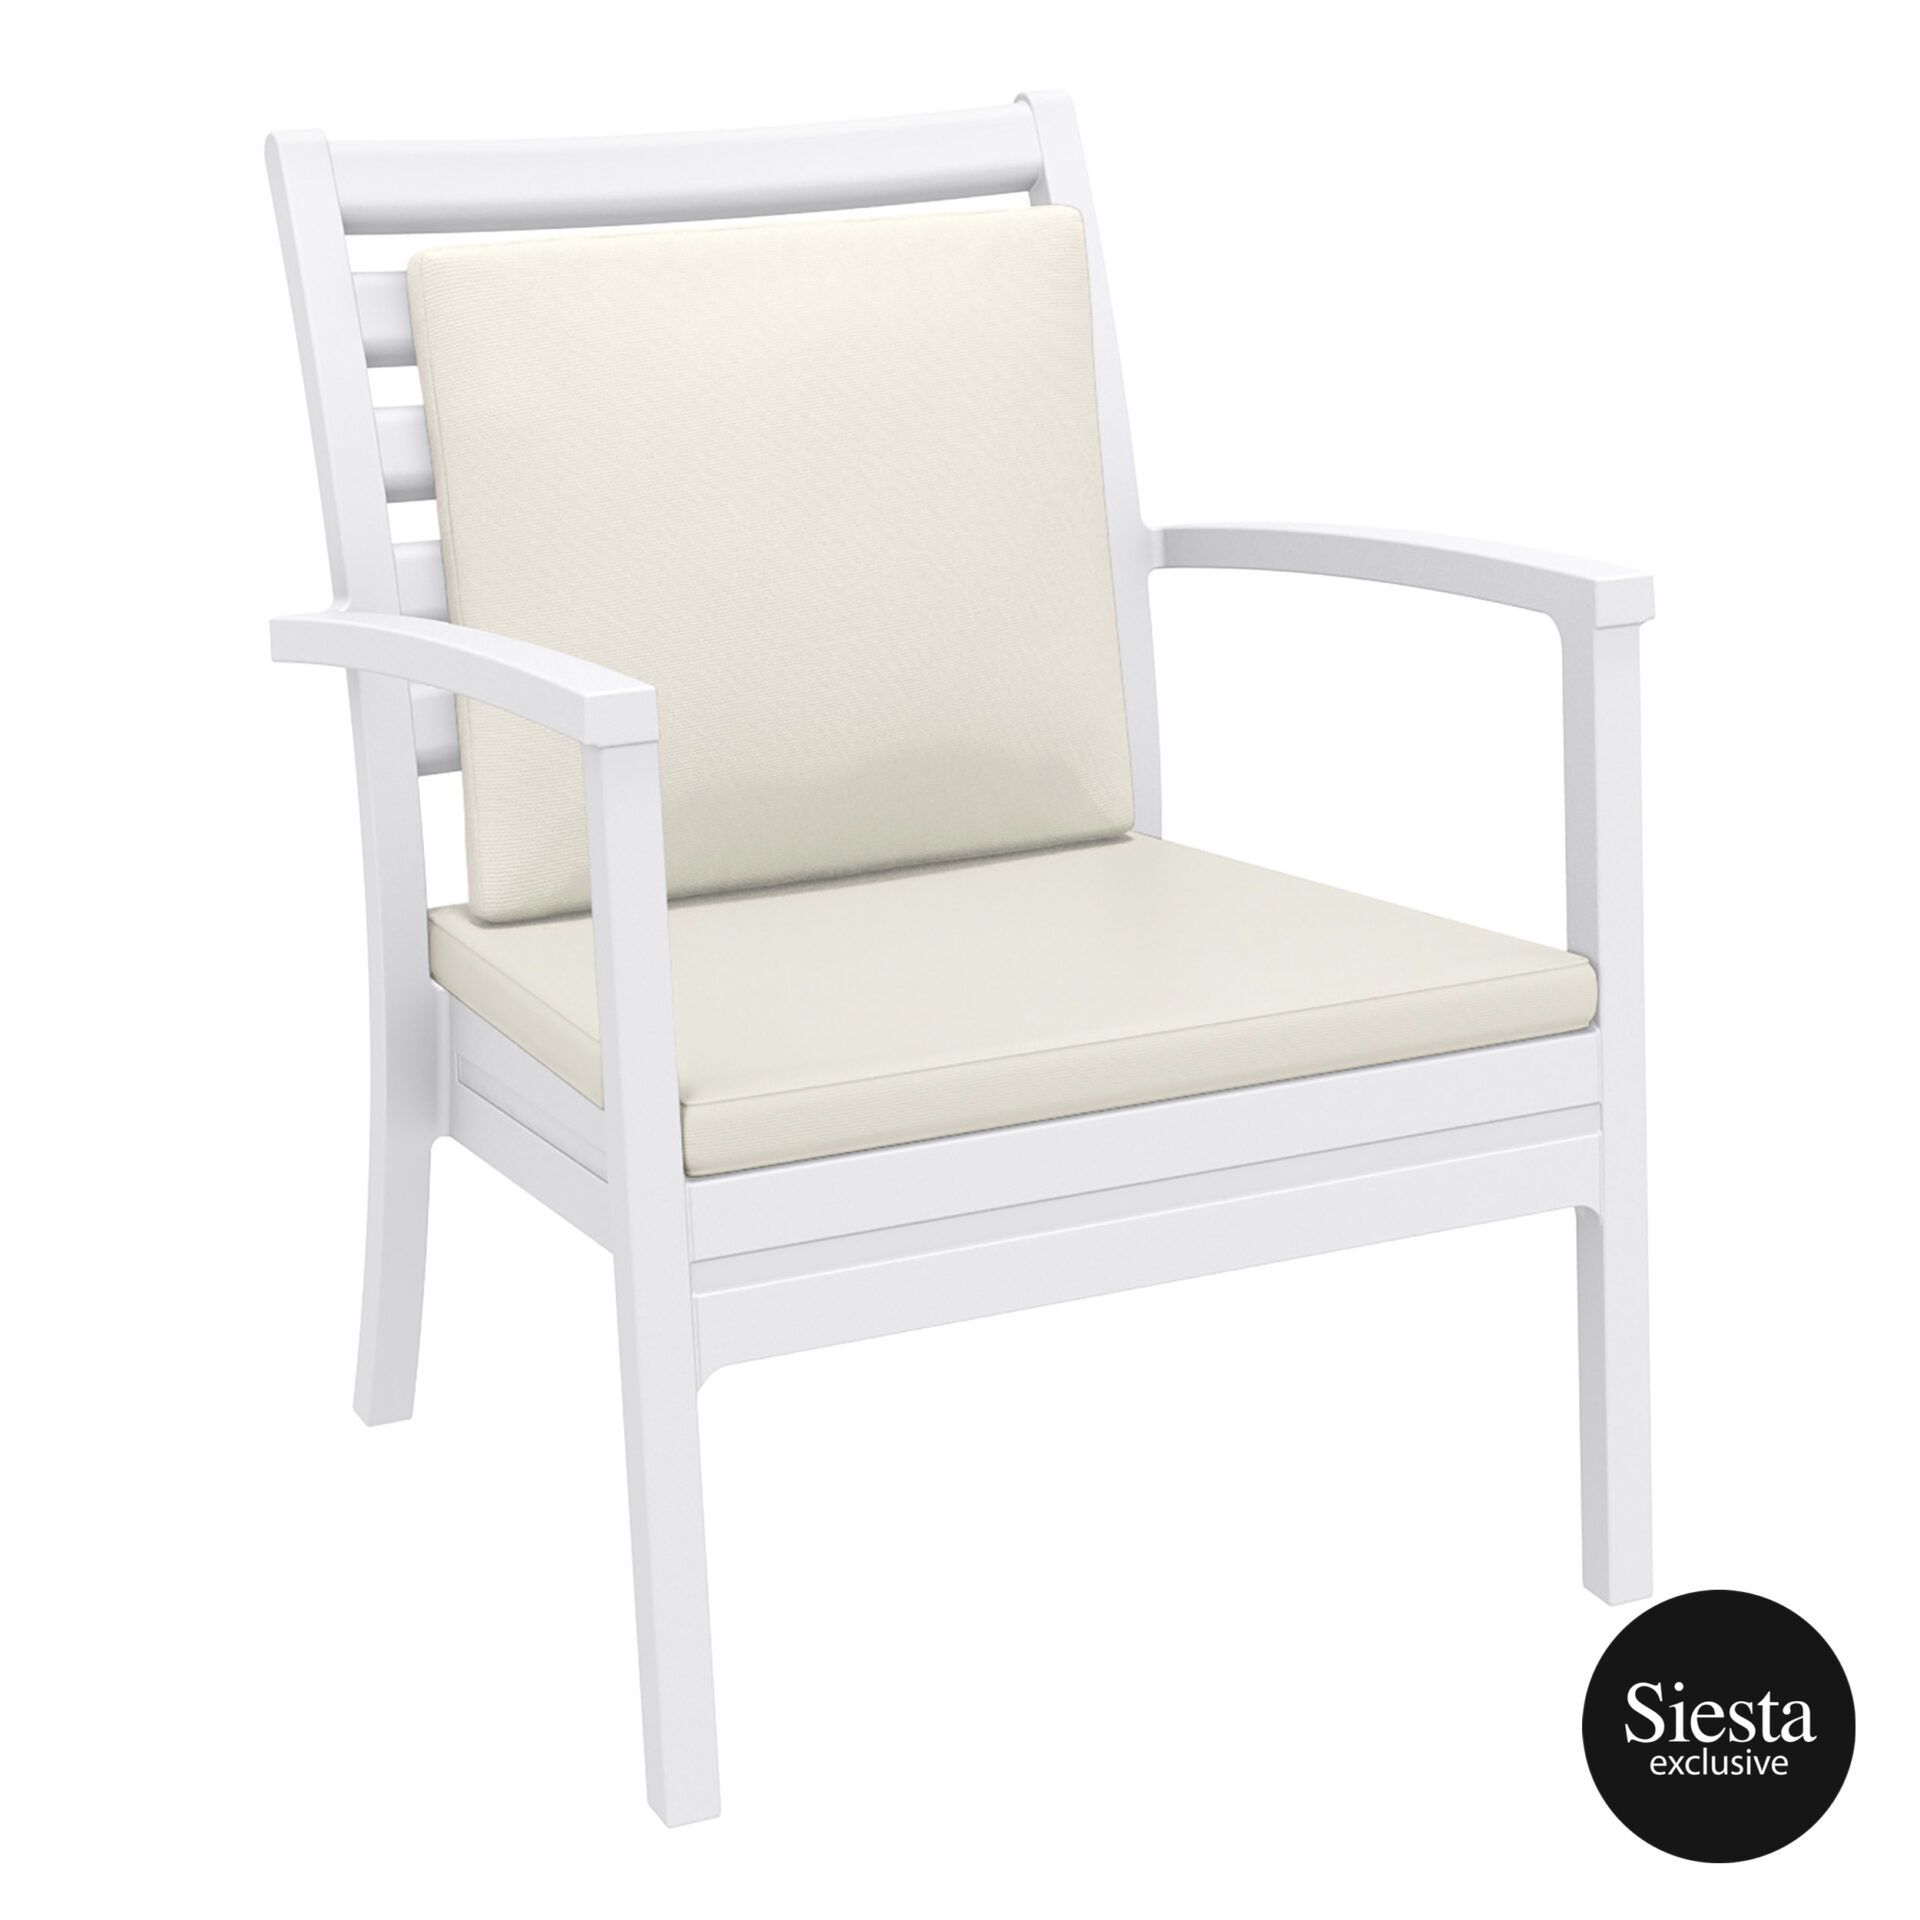 Artemis Xl Backrest Cushion beige white front side